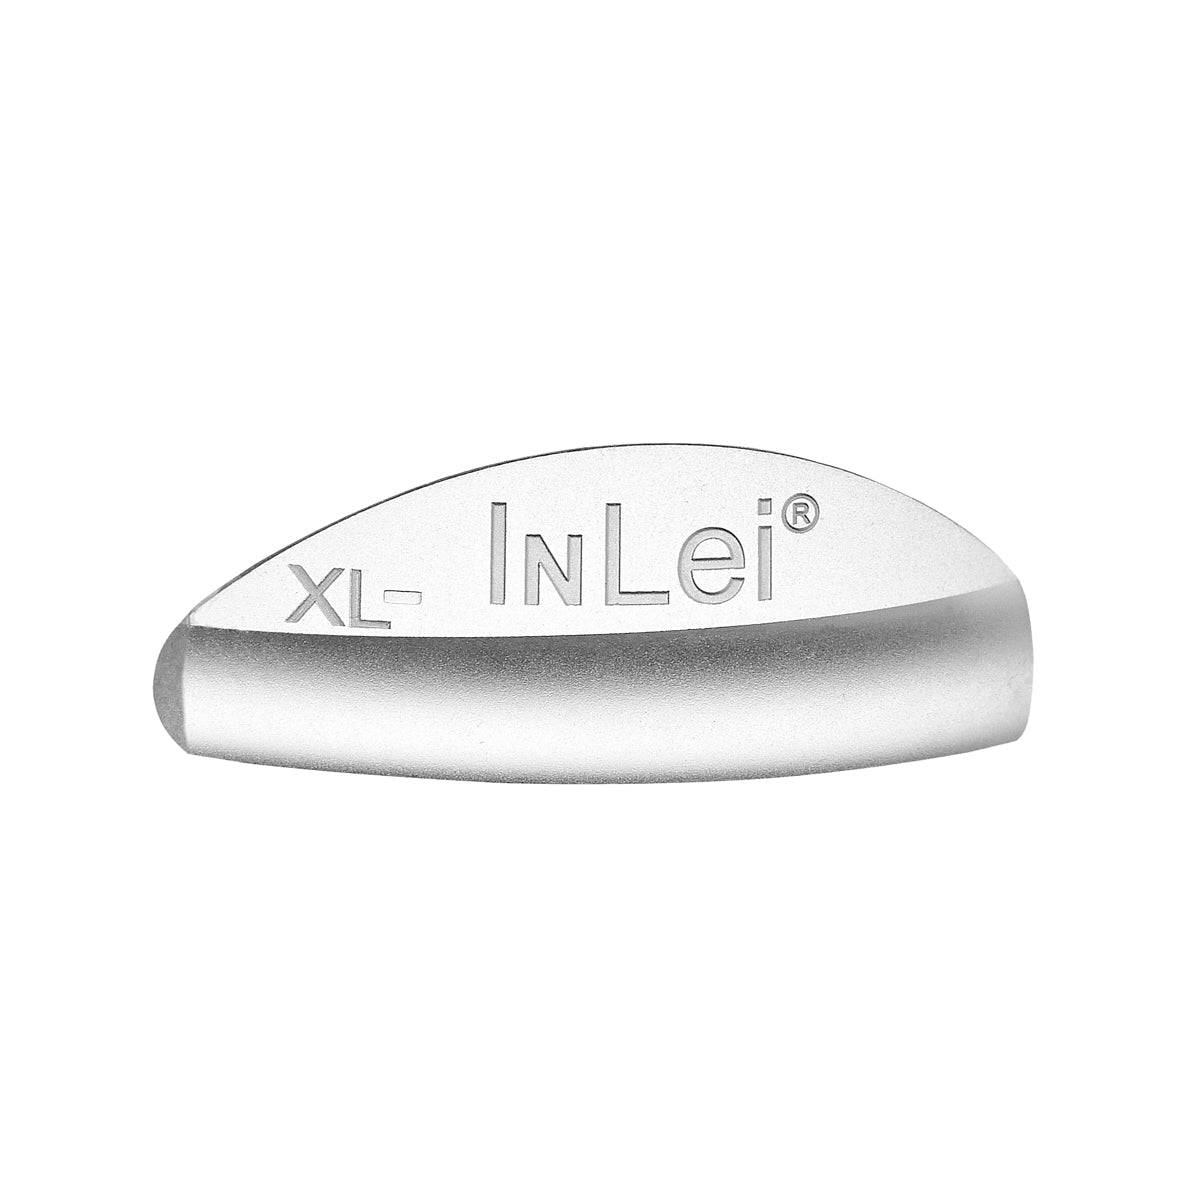 InLei® | Silicone Shields | 'ONE' | XL 6 Pair - inlei.com